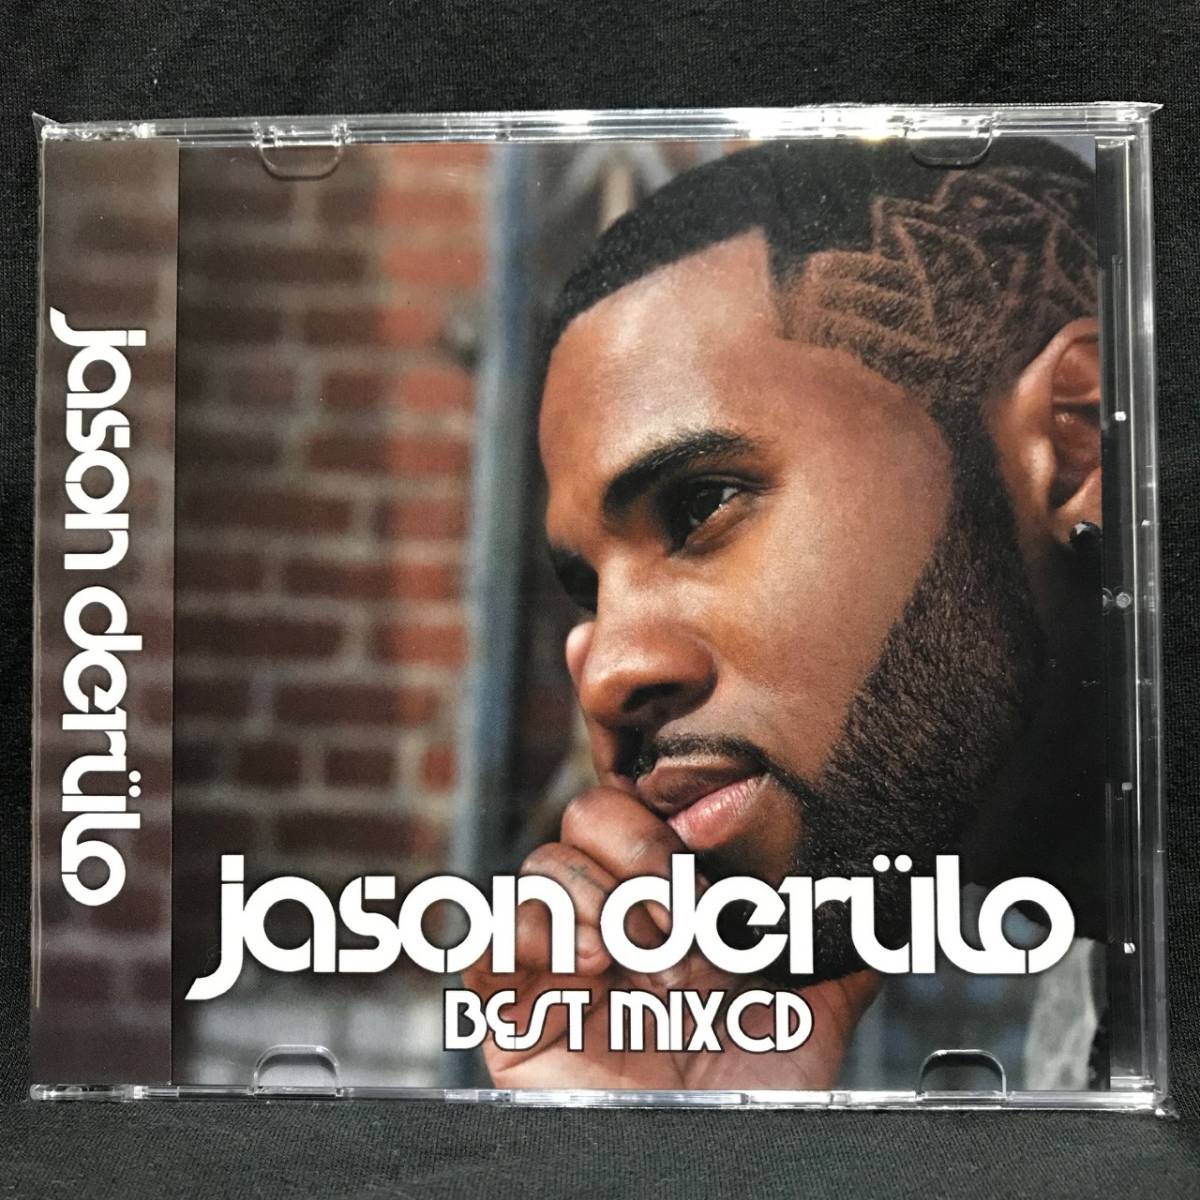 Jason Derulo Best MixCD ジェイソン デルーロ【28曲収録】新品 (V-025)｜PayPayフリマ